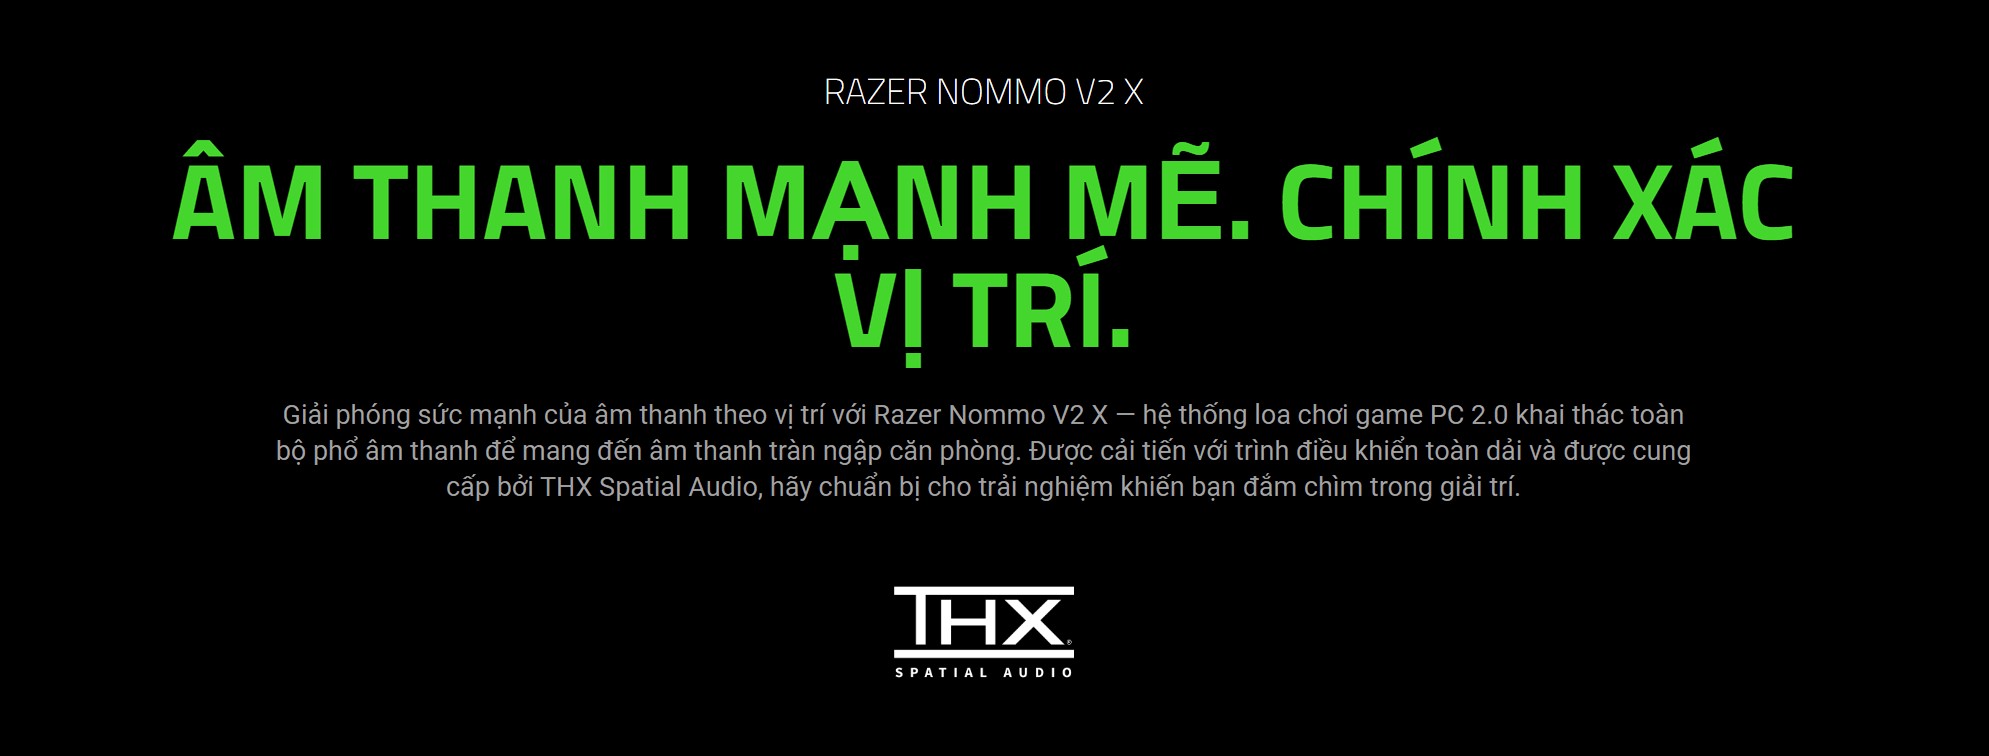 Loa Razer Nommo V2 X - 2.0 - Màu đen